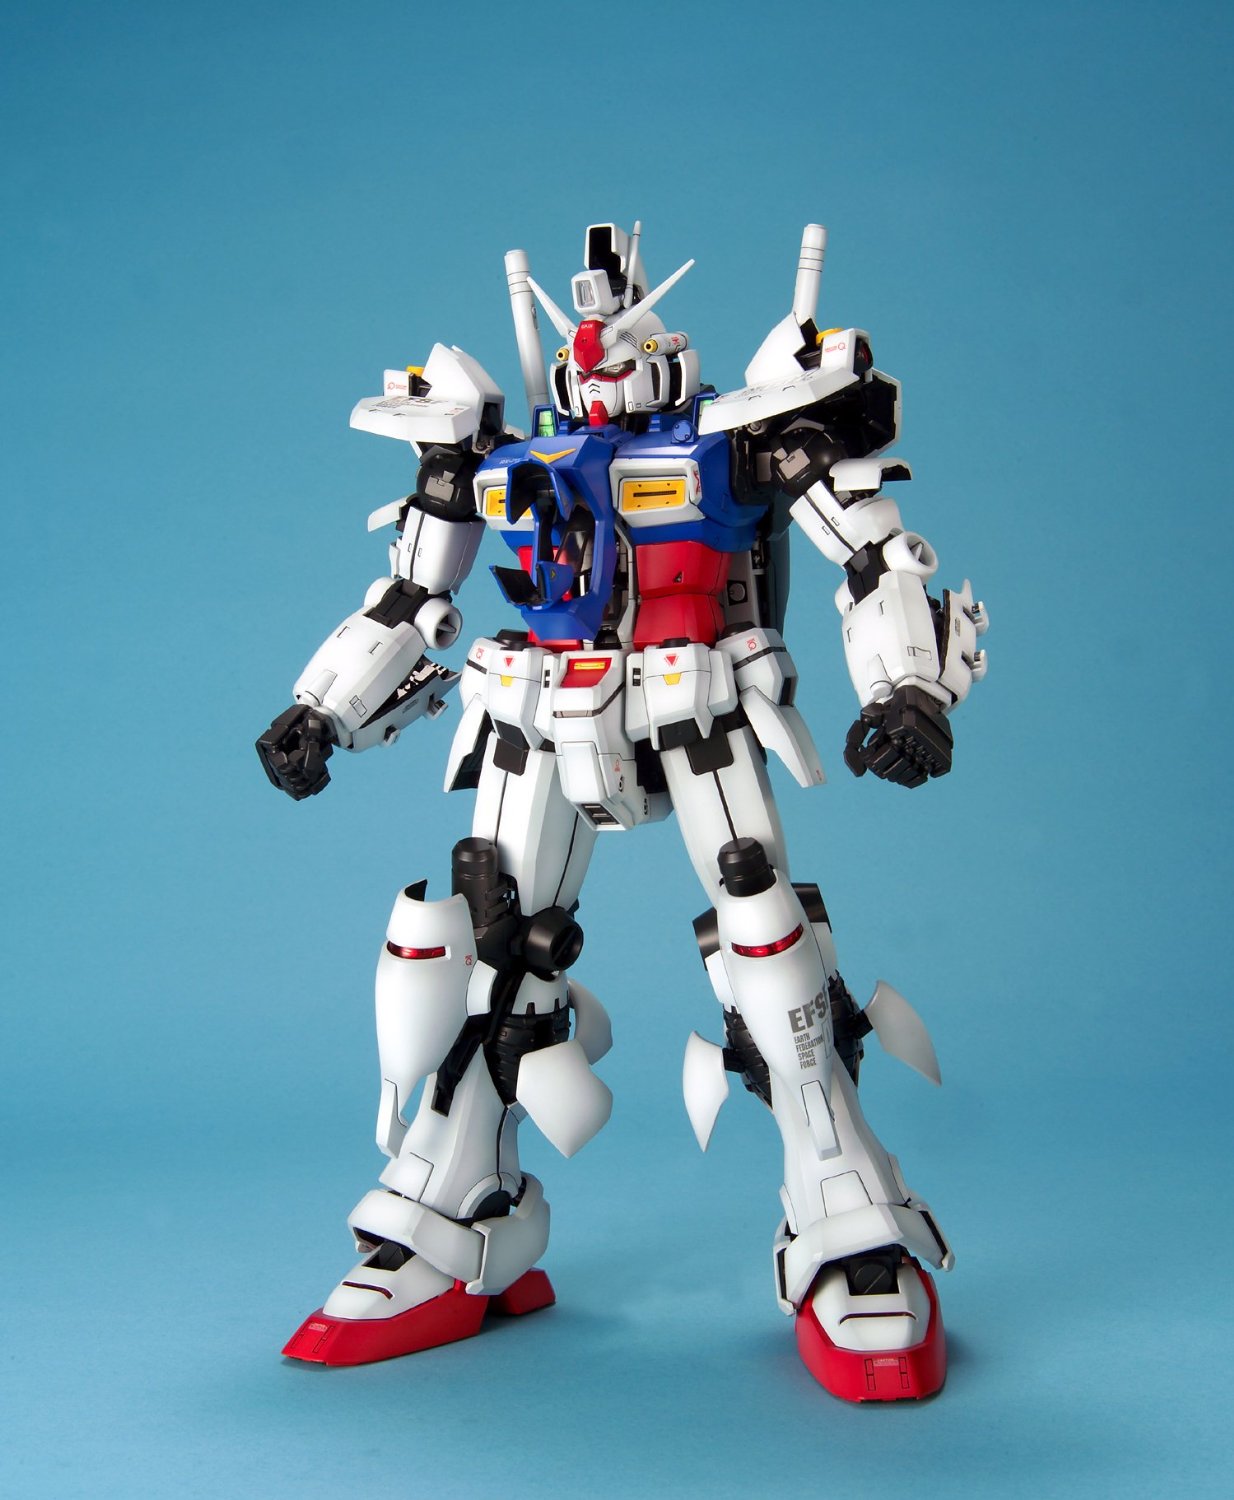 GUNDAM - PG 1/60 - RX-78 Gundam GP-01/Fb